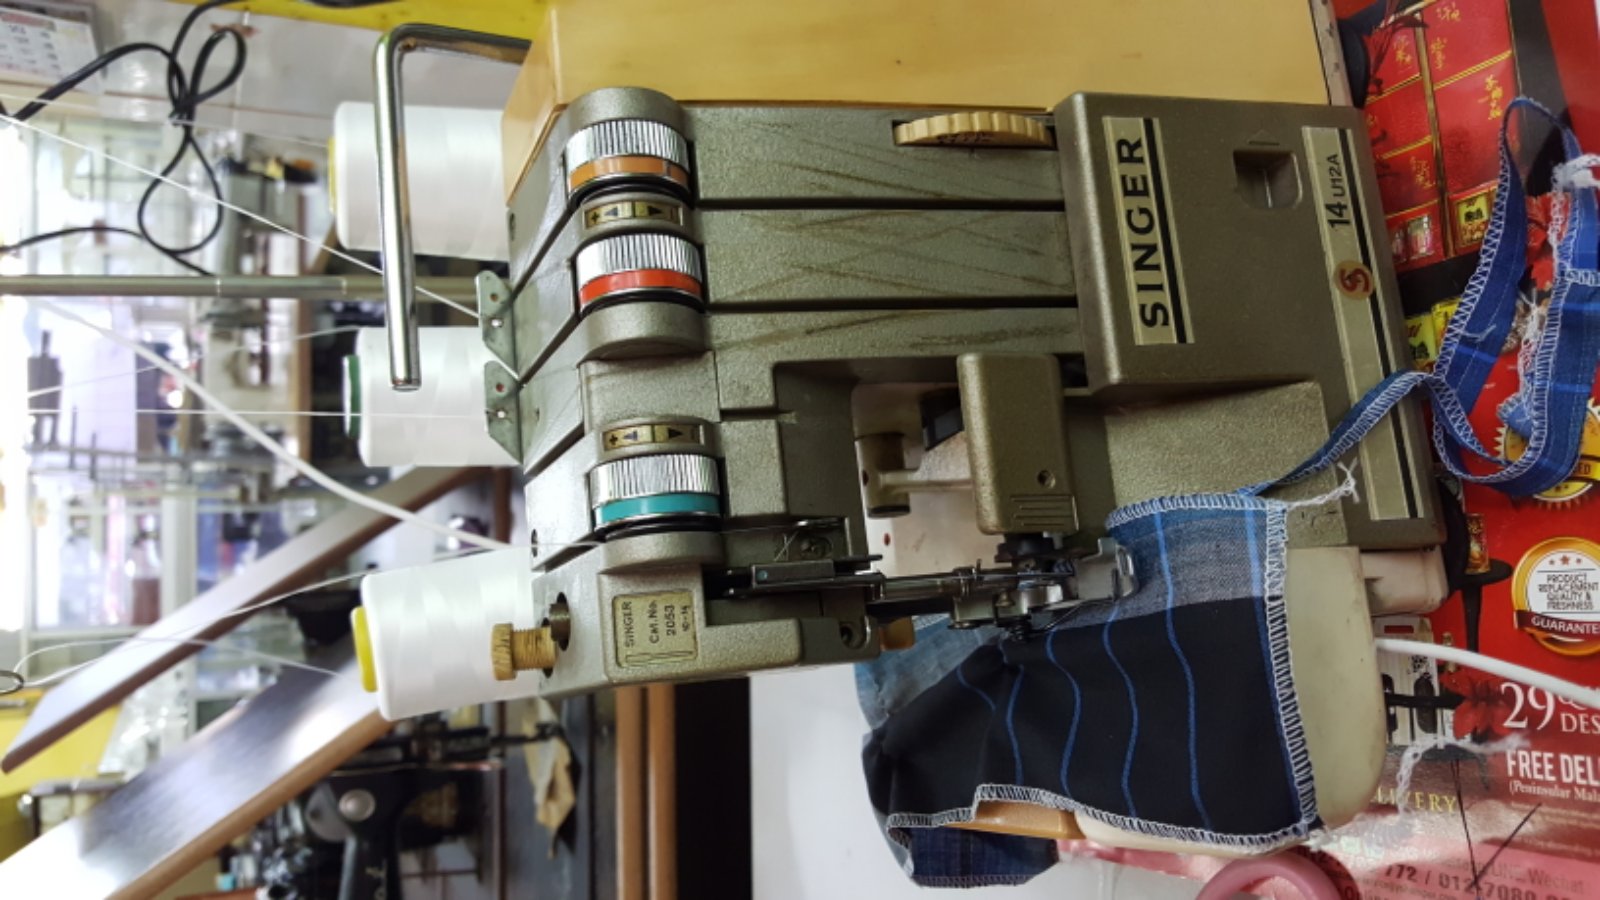 Second Hand Singer Overlock Sewing Machine